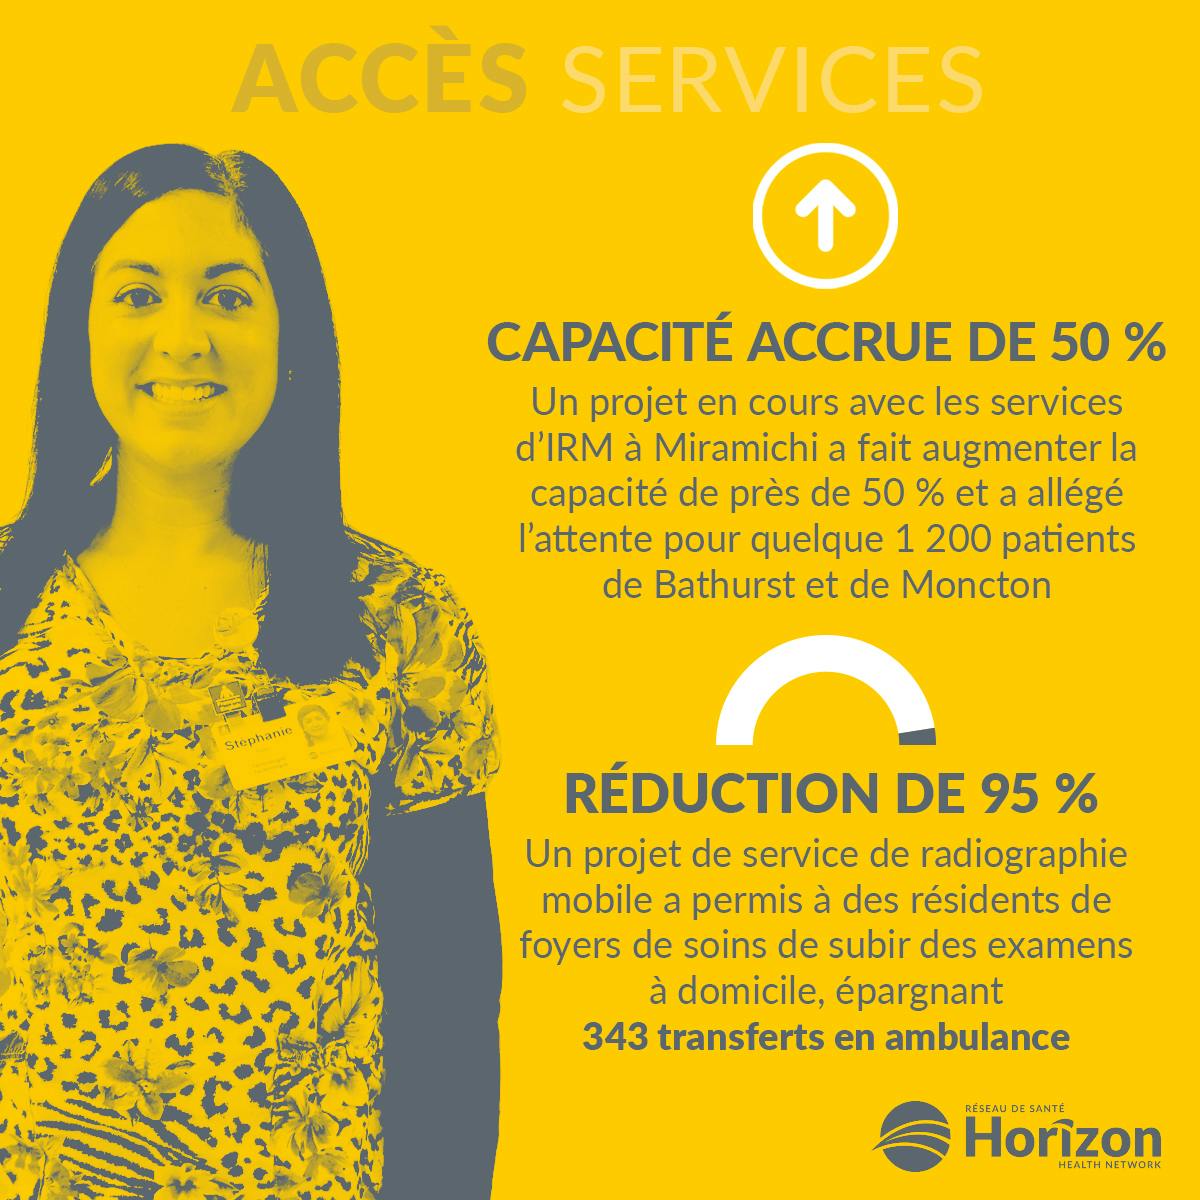 Access-Services